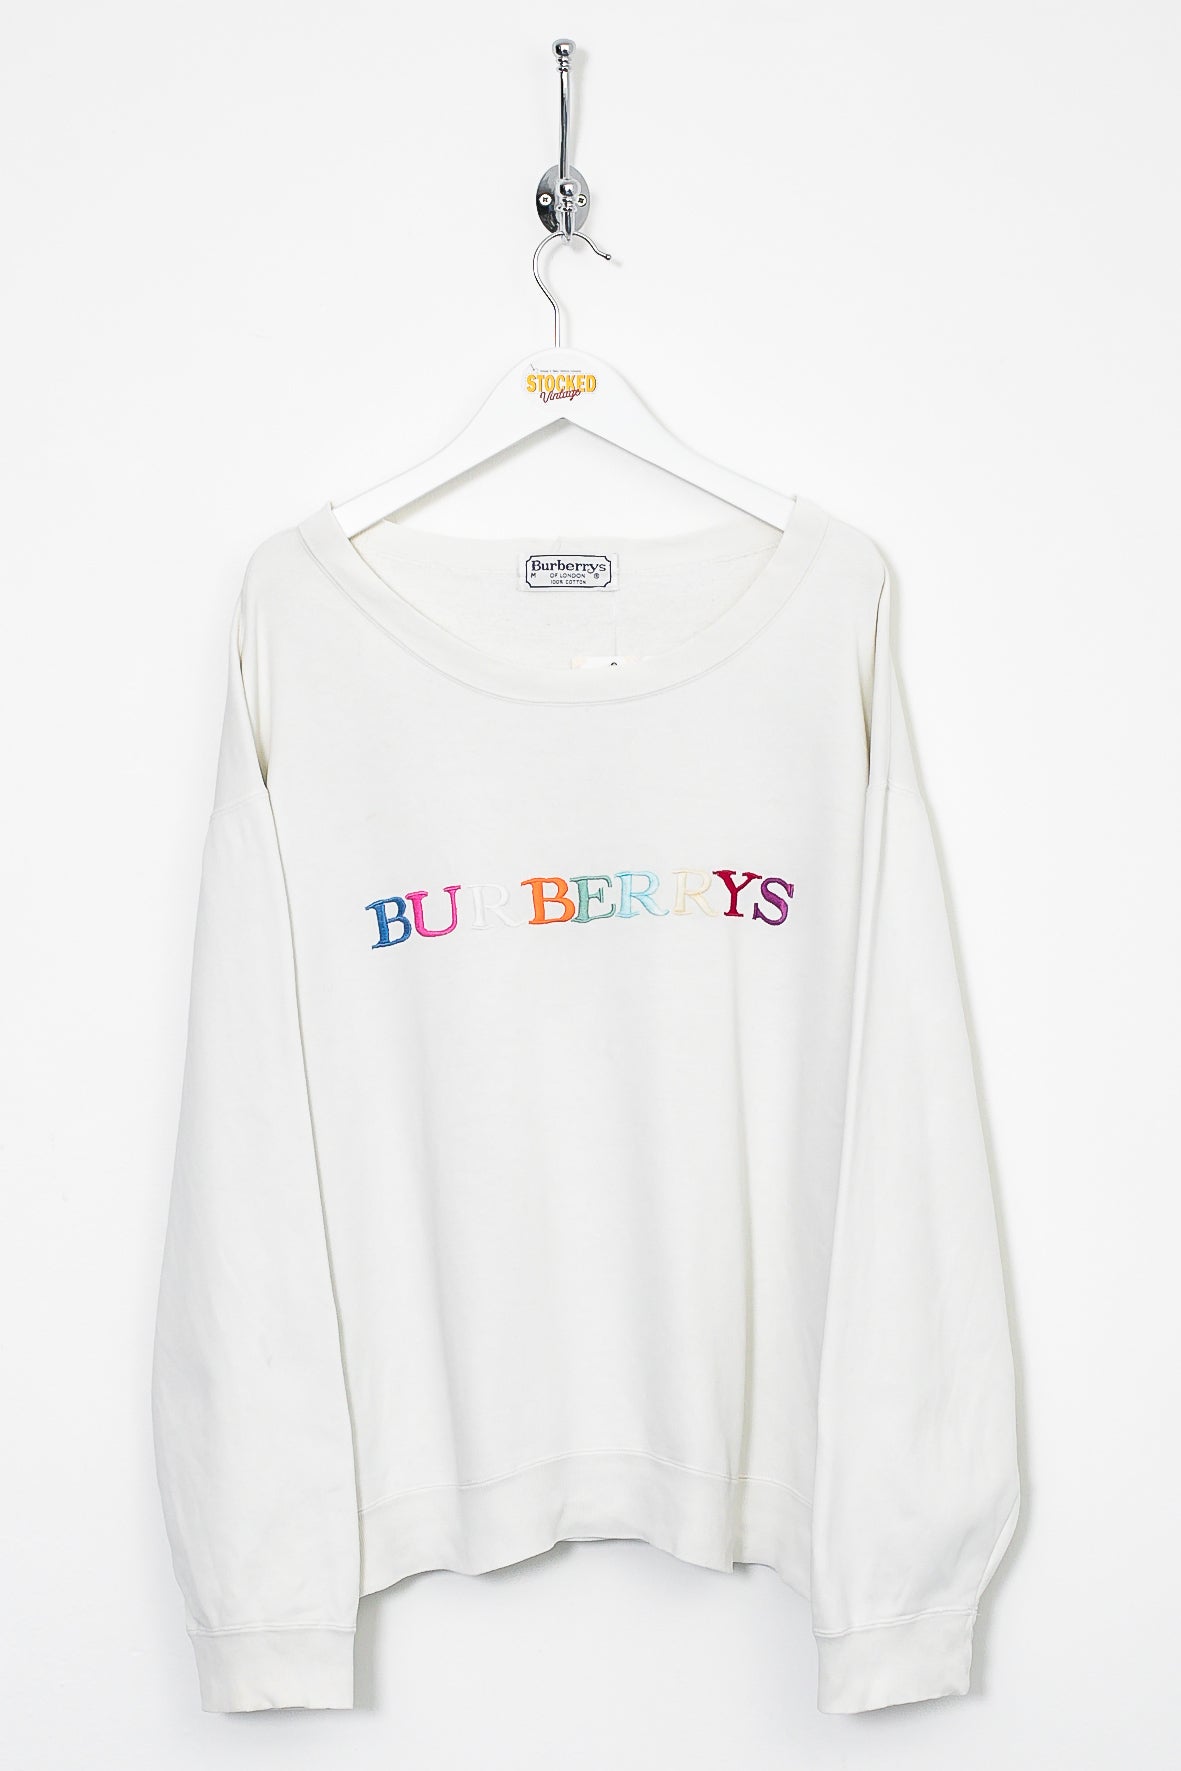 90s Burberry Sweatshirt (M)